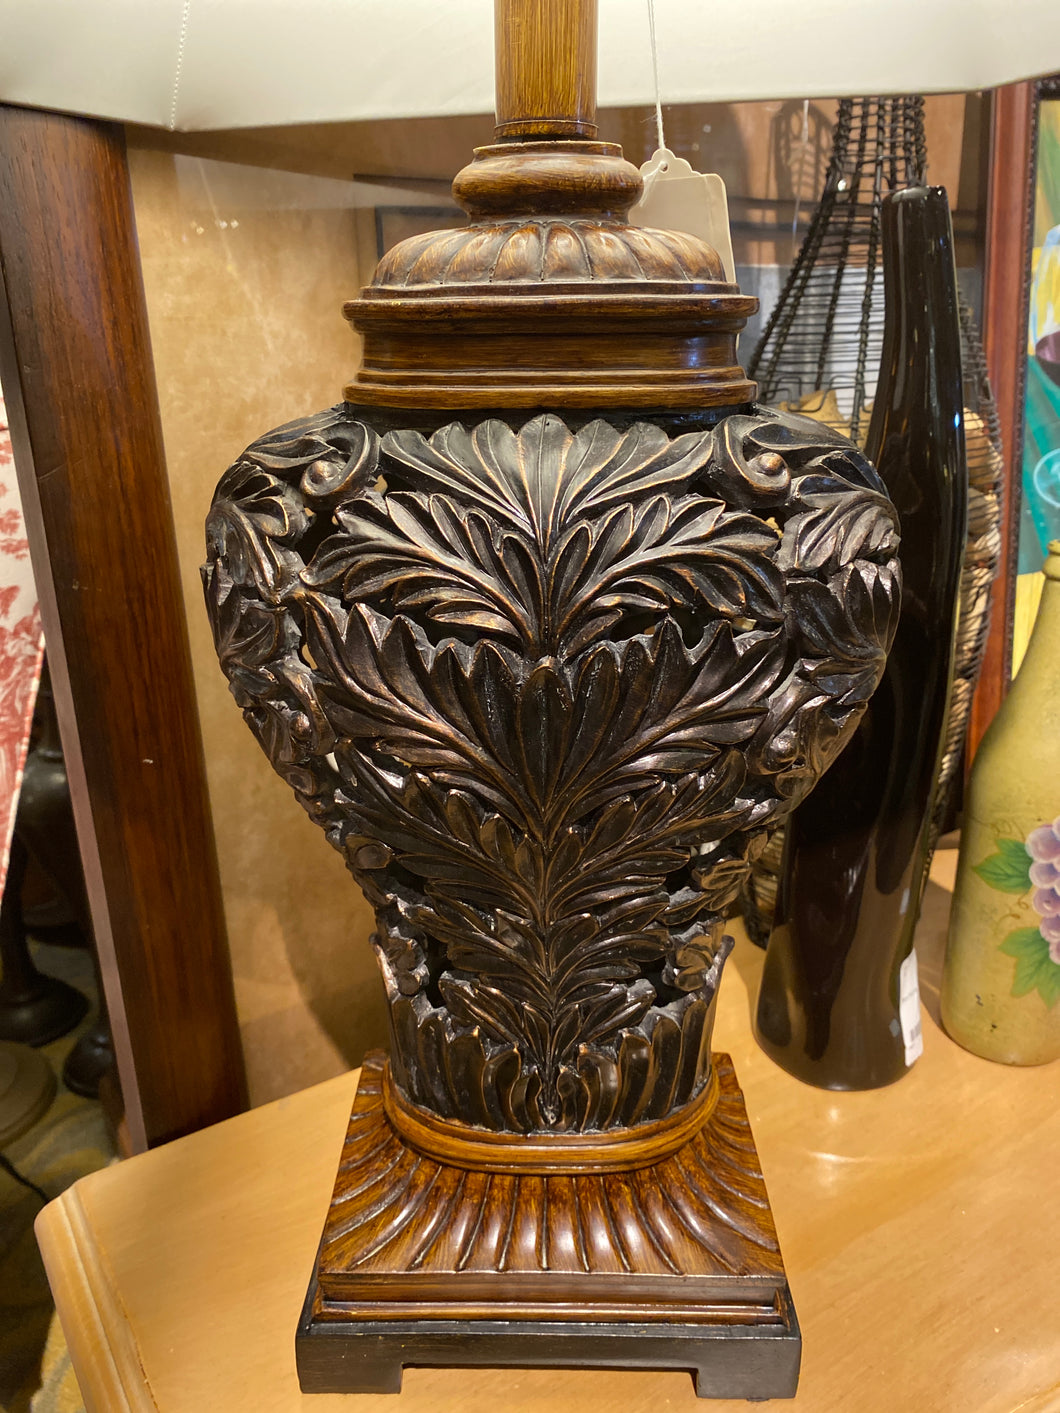 Ornate Brown Lamp w/ Rectangular Shade